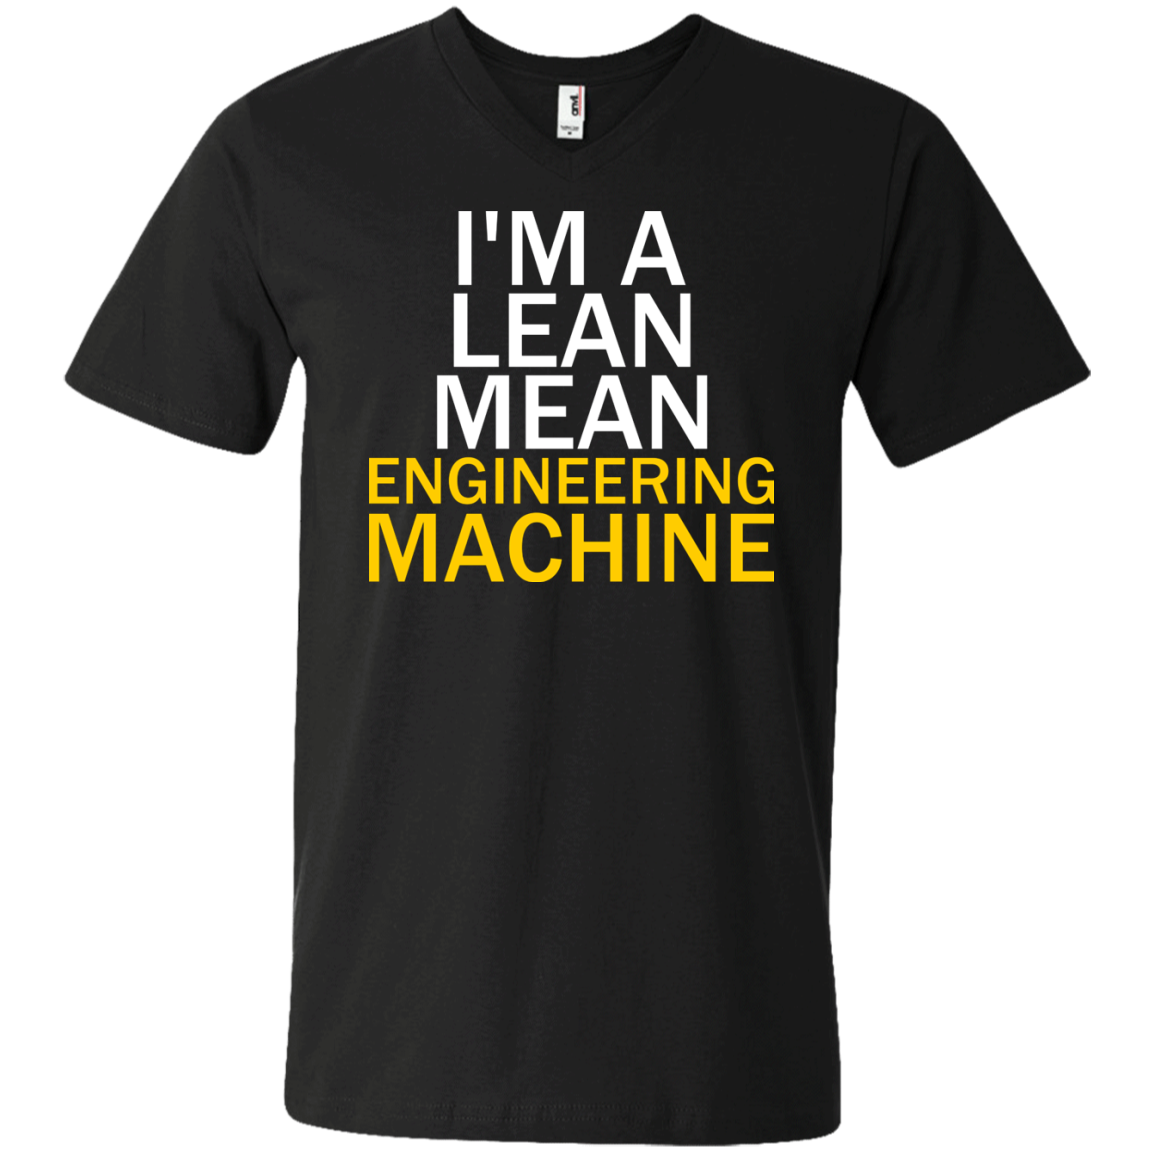 I'm A Lean, Mean, Engineering Machine